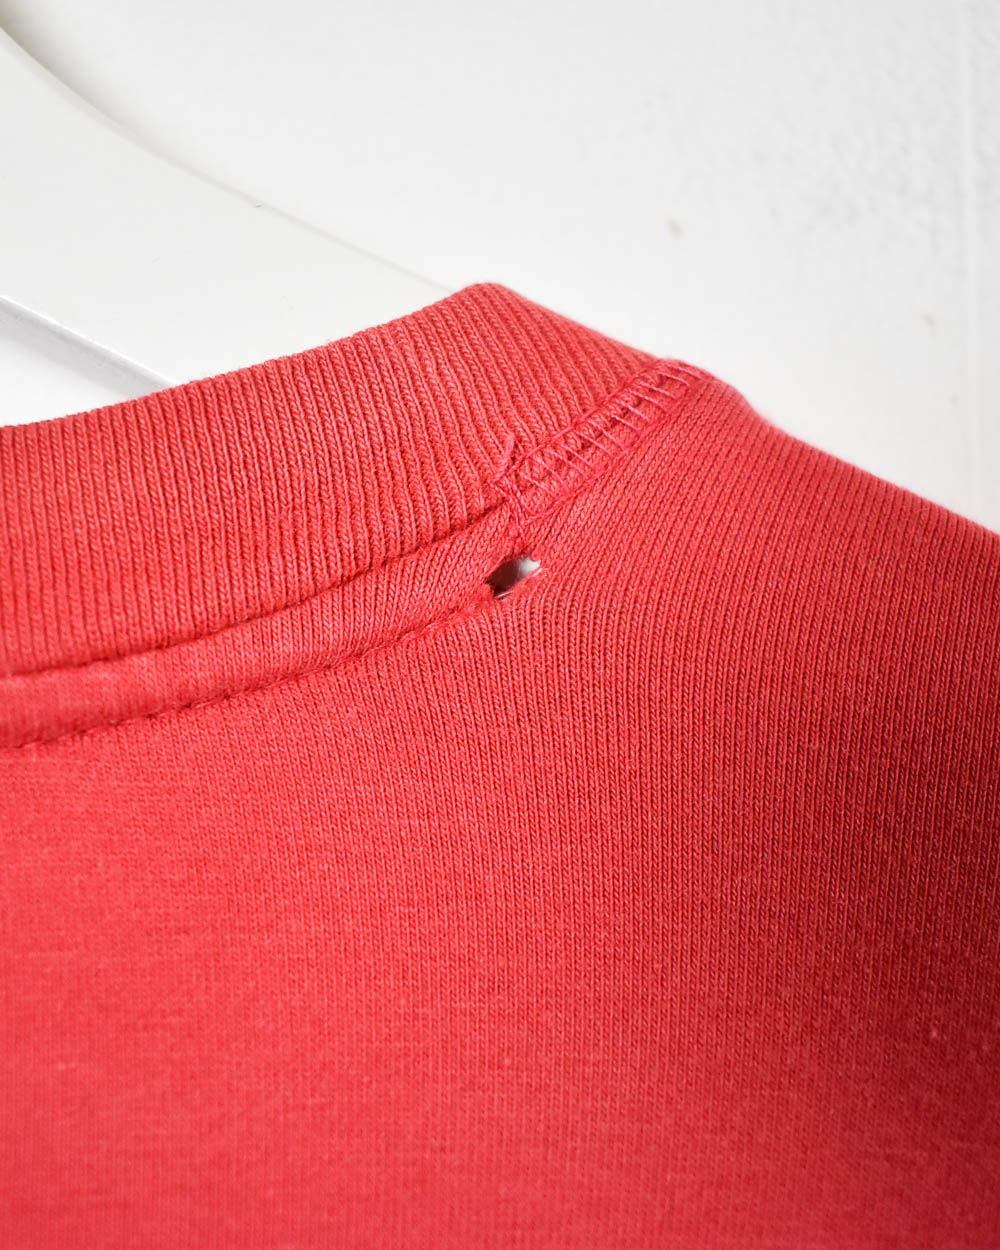 Red Nike SportsDLX Long Sleeved T-Shirt - Large